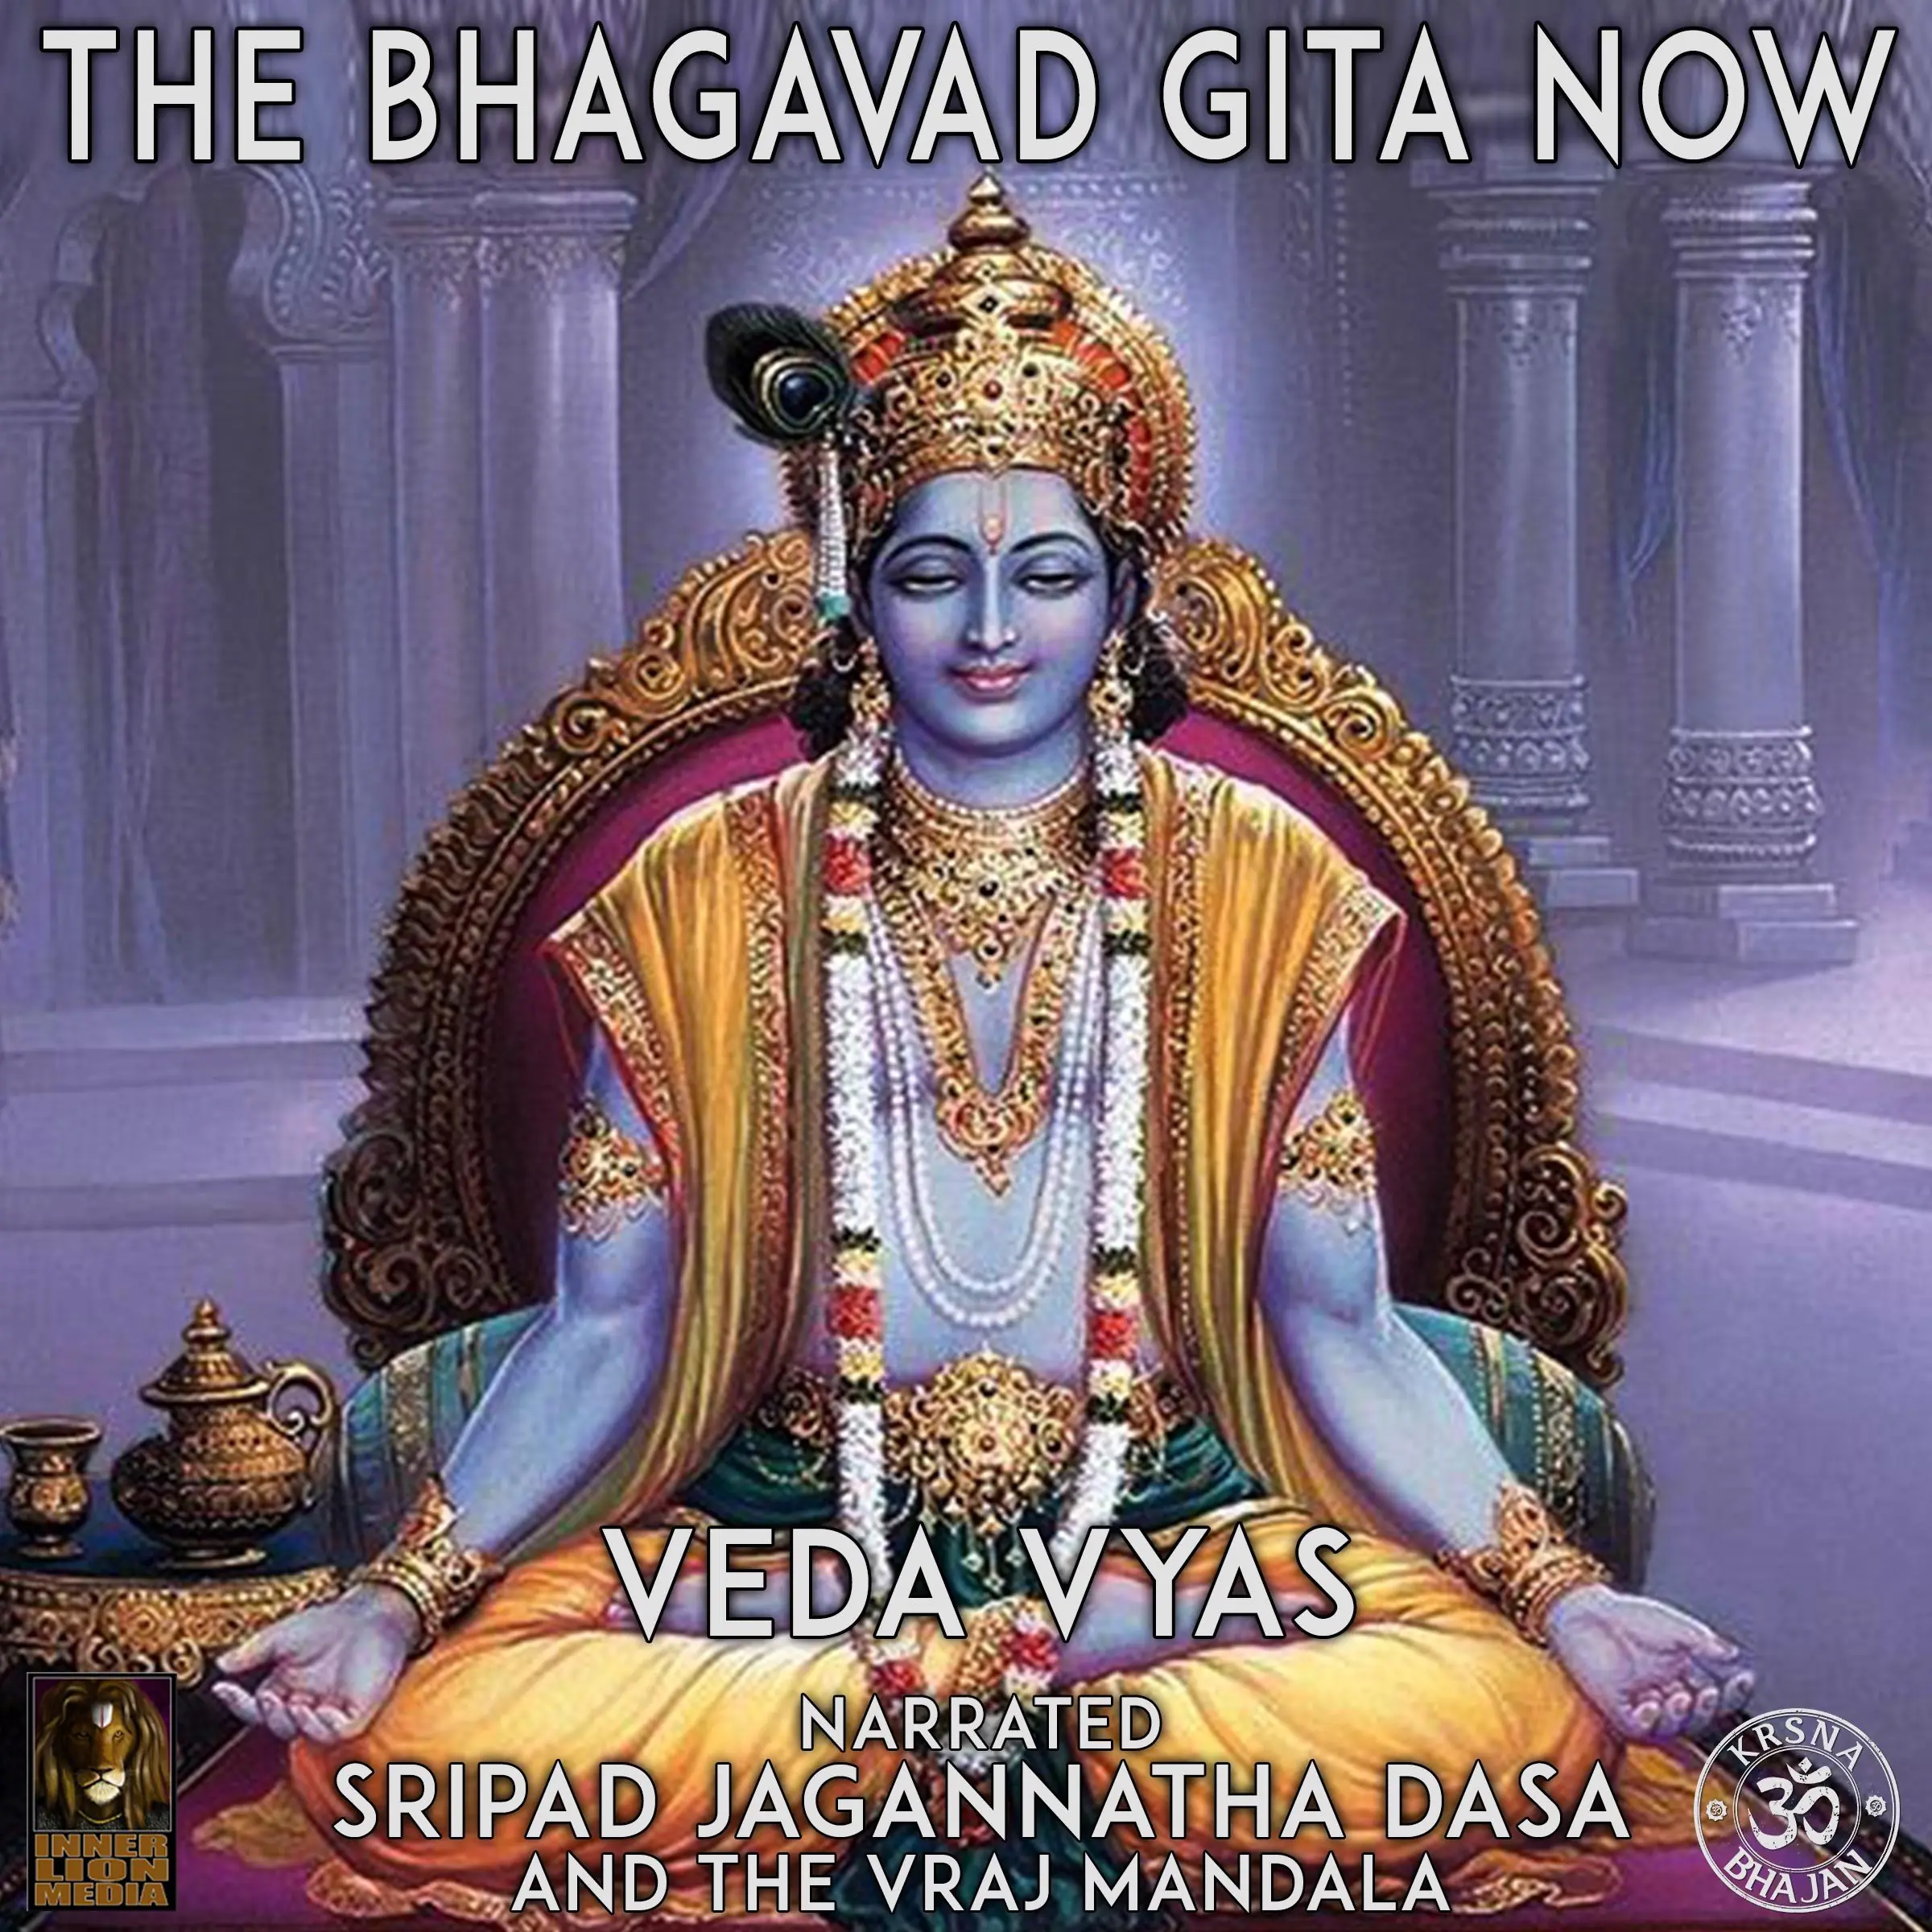 The Bhagavad Gita Now Audiobook by Veda Vyas